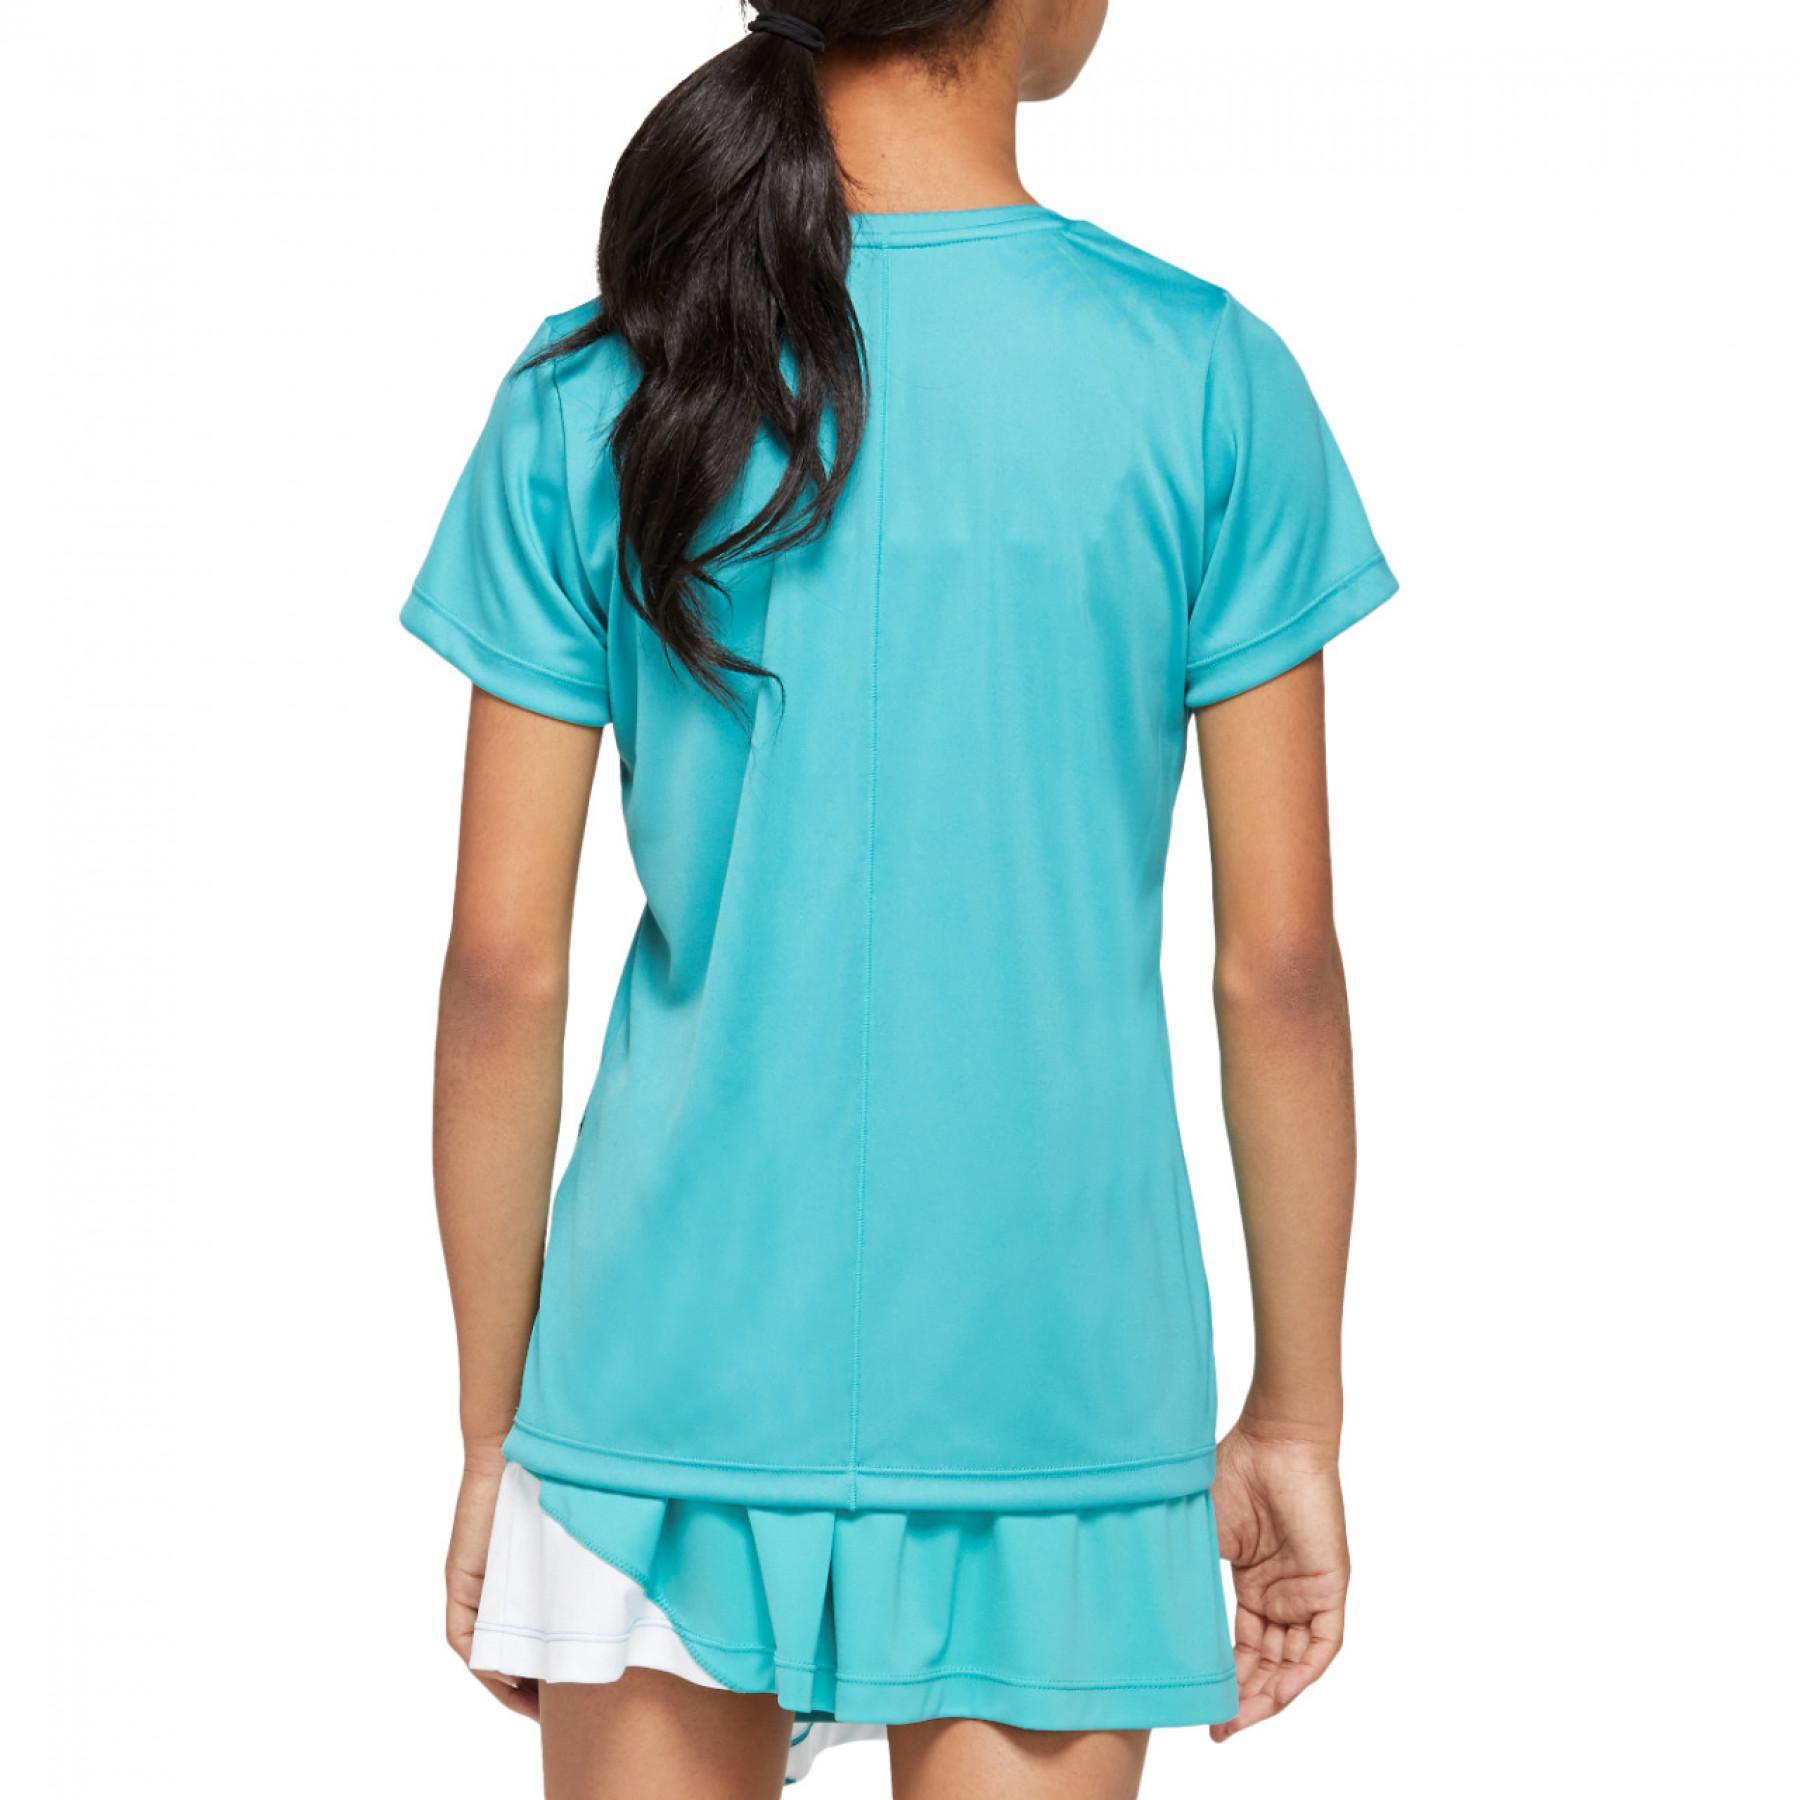 Child's T-shirt Asics Tennis G Kids Gpx T